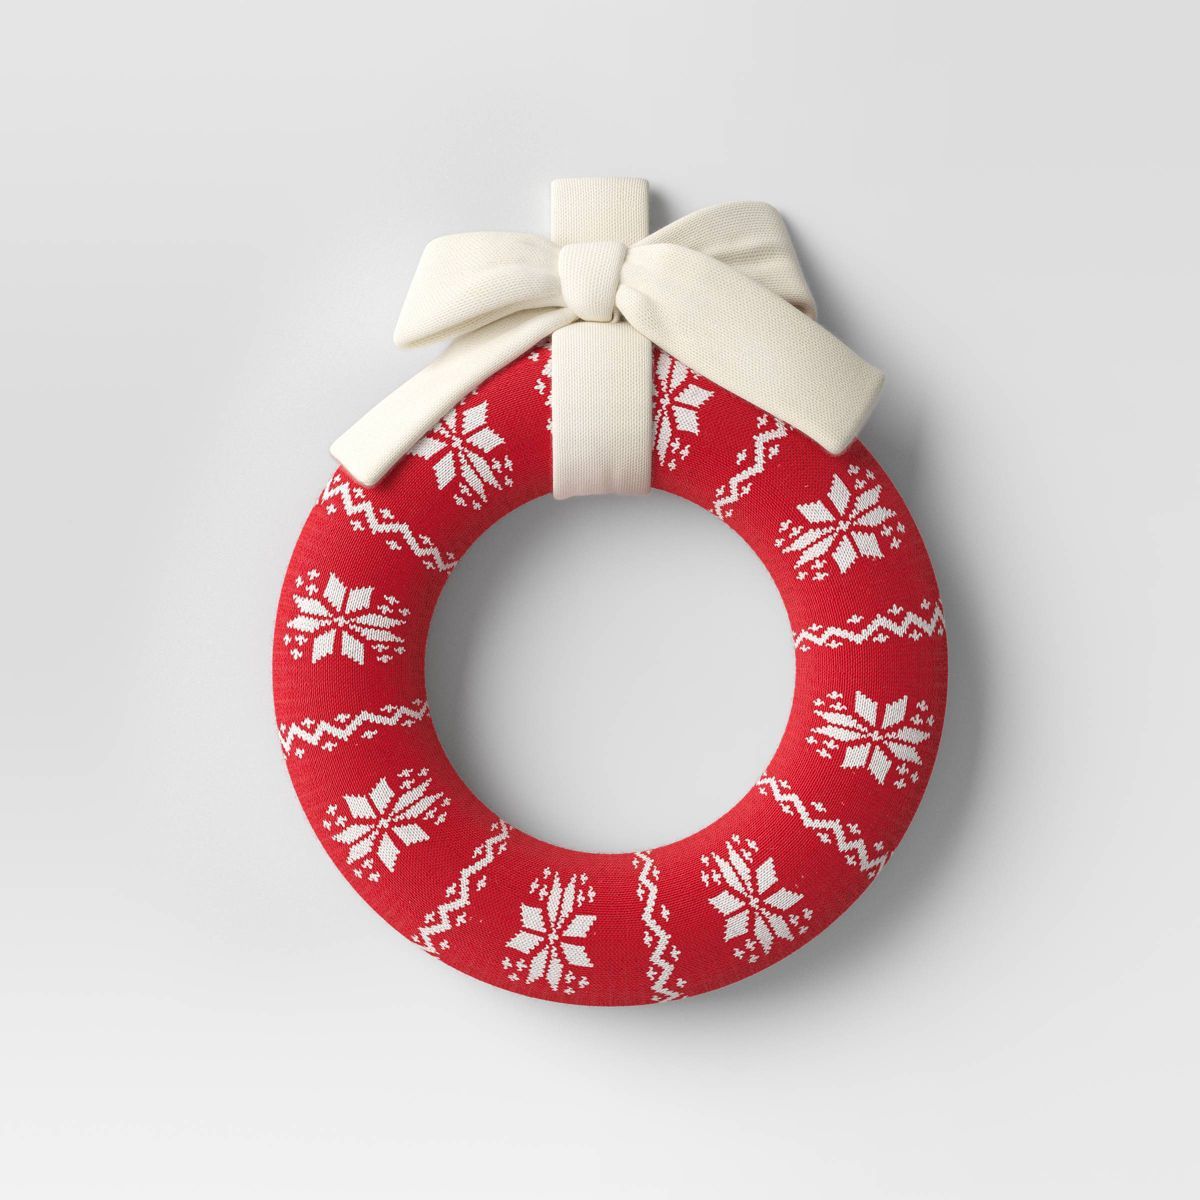 16" Knit Fair Isle Christmas Decorative Wreath Red/White - Wondershop™ | Target